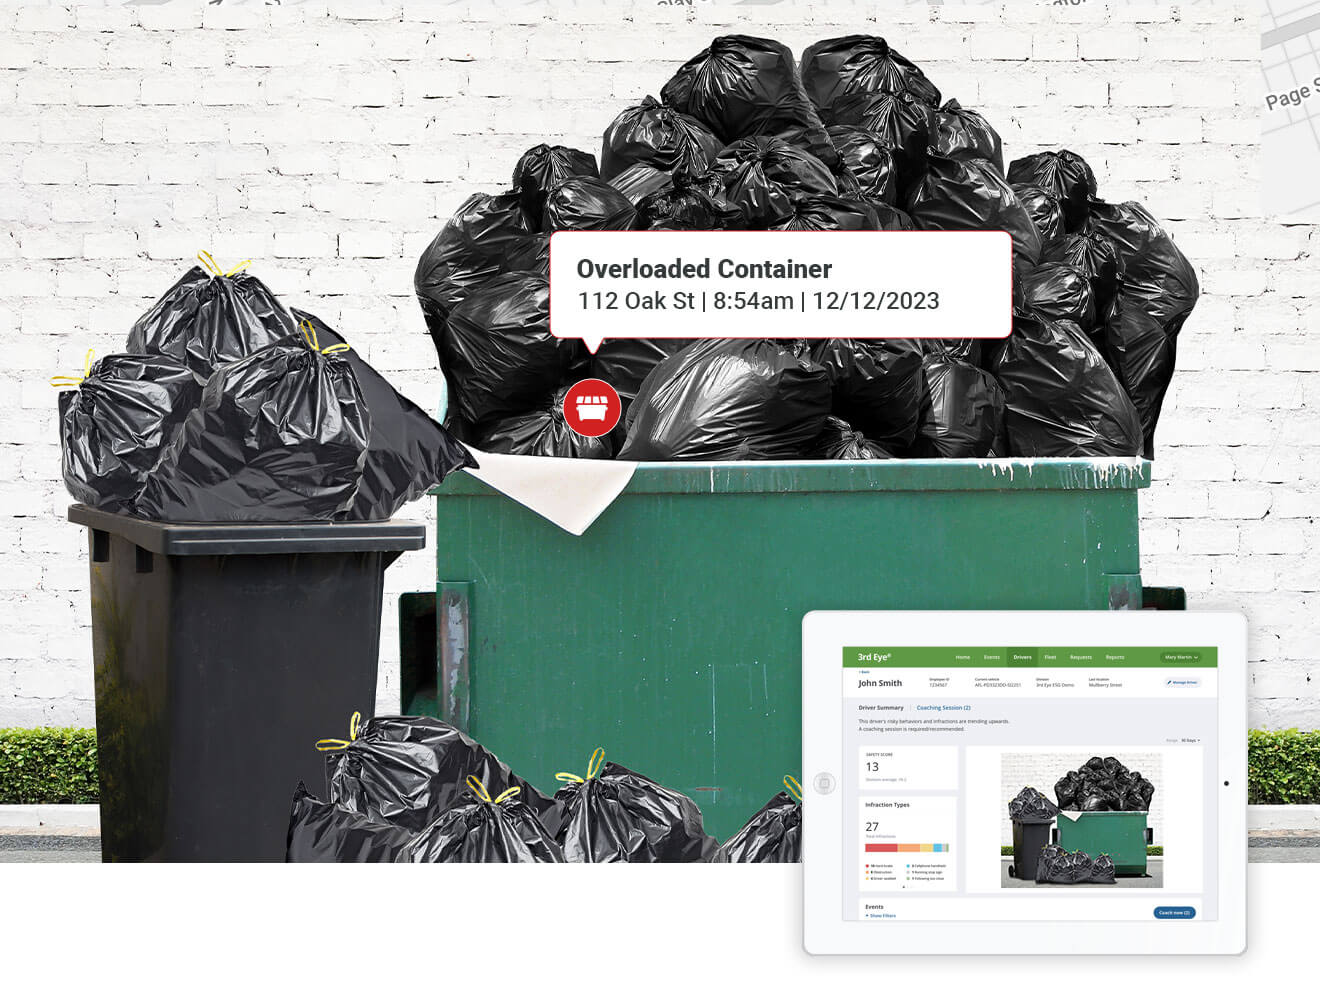 Overloaded dumpster detection software for garbage trucks